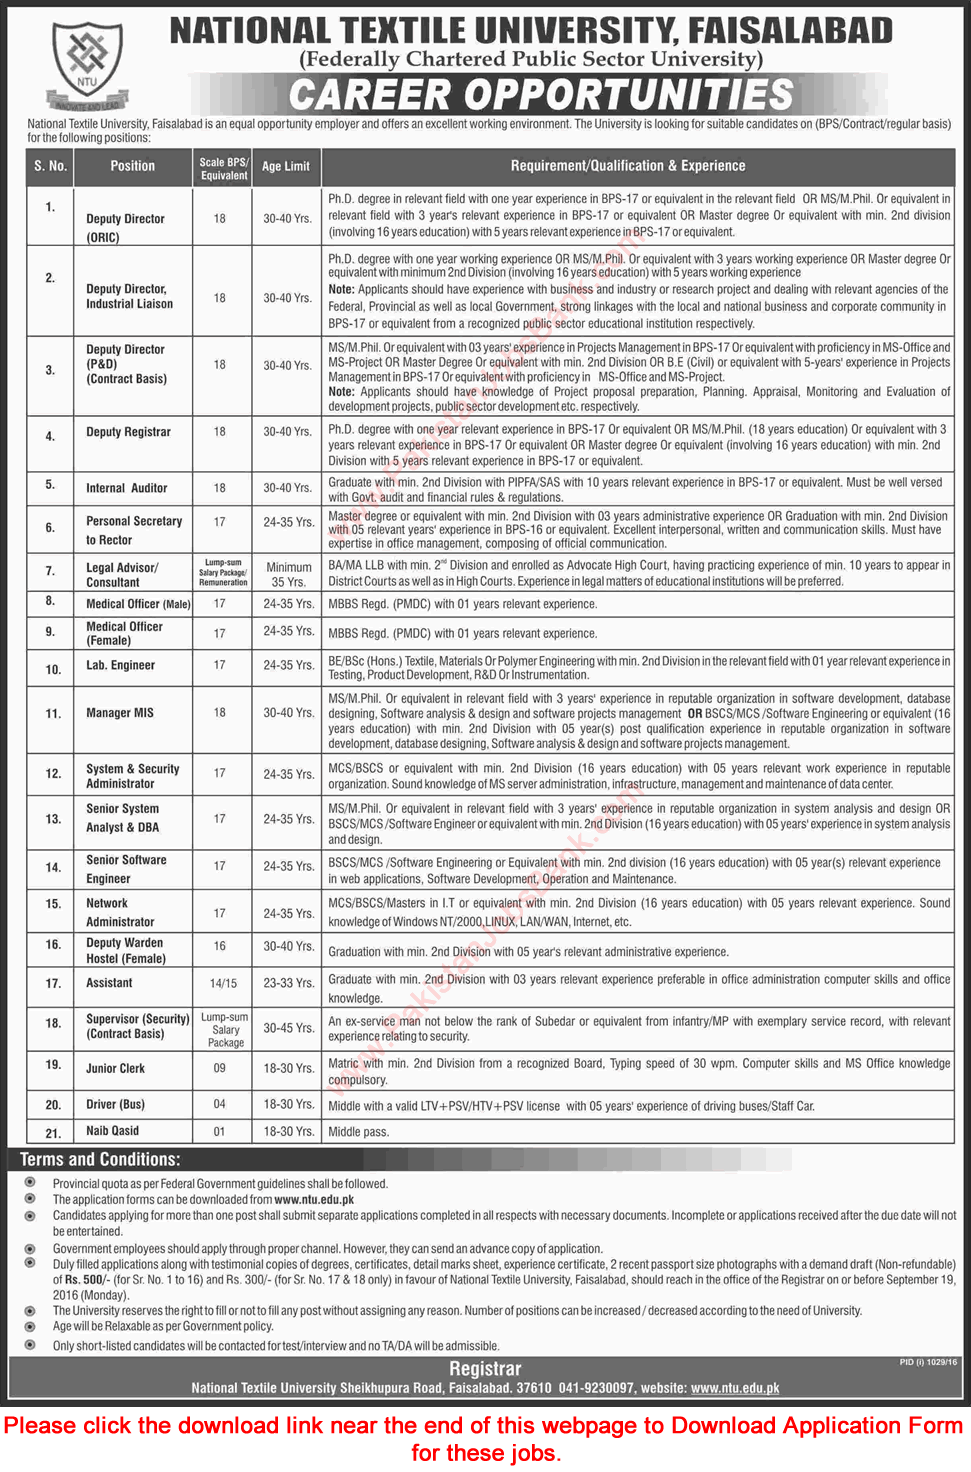 National Textile University Faisalabad Jobs August 2016 September NTU Application Form Download Latest